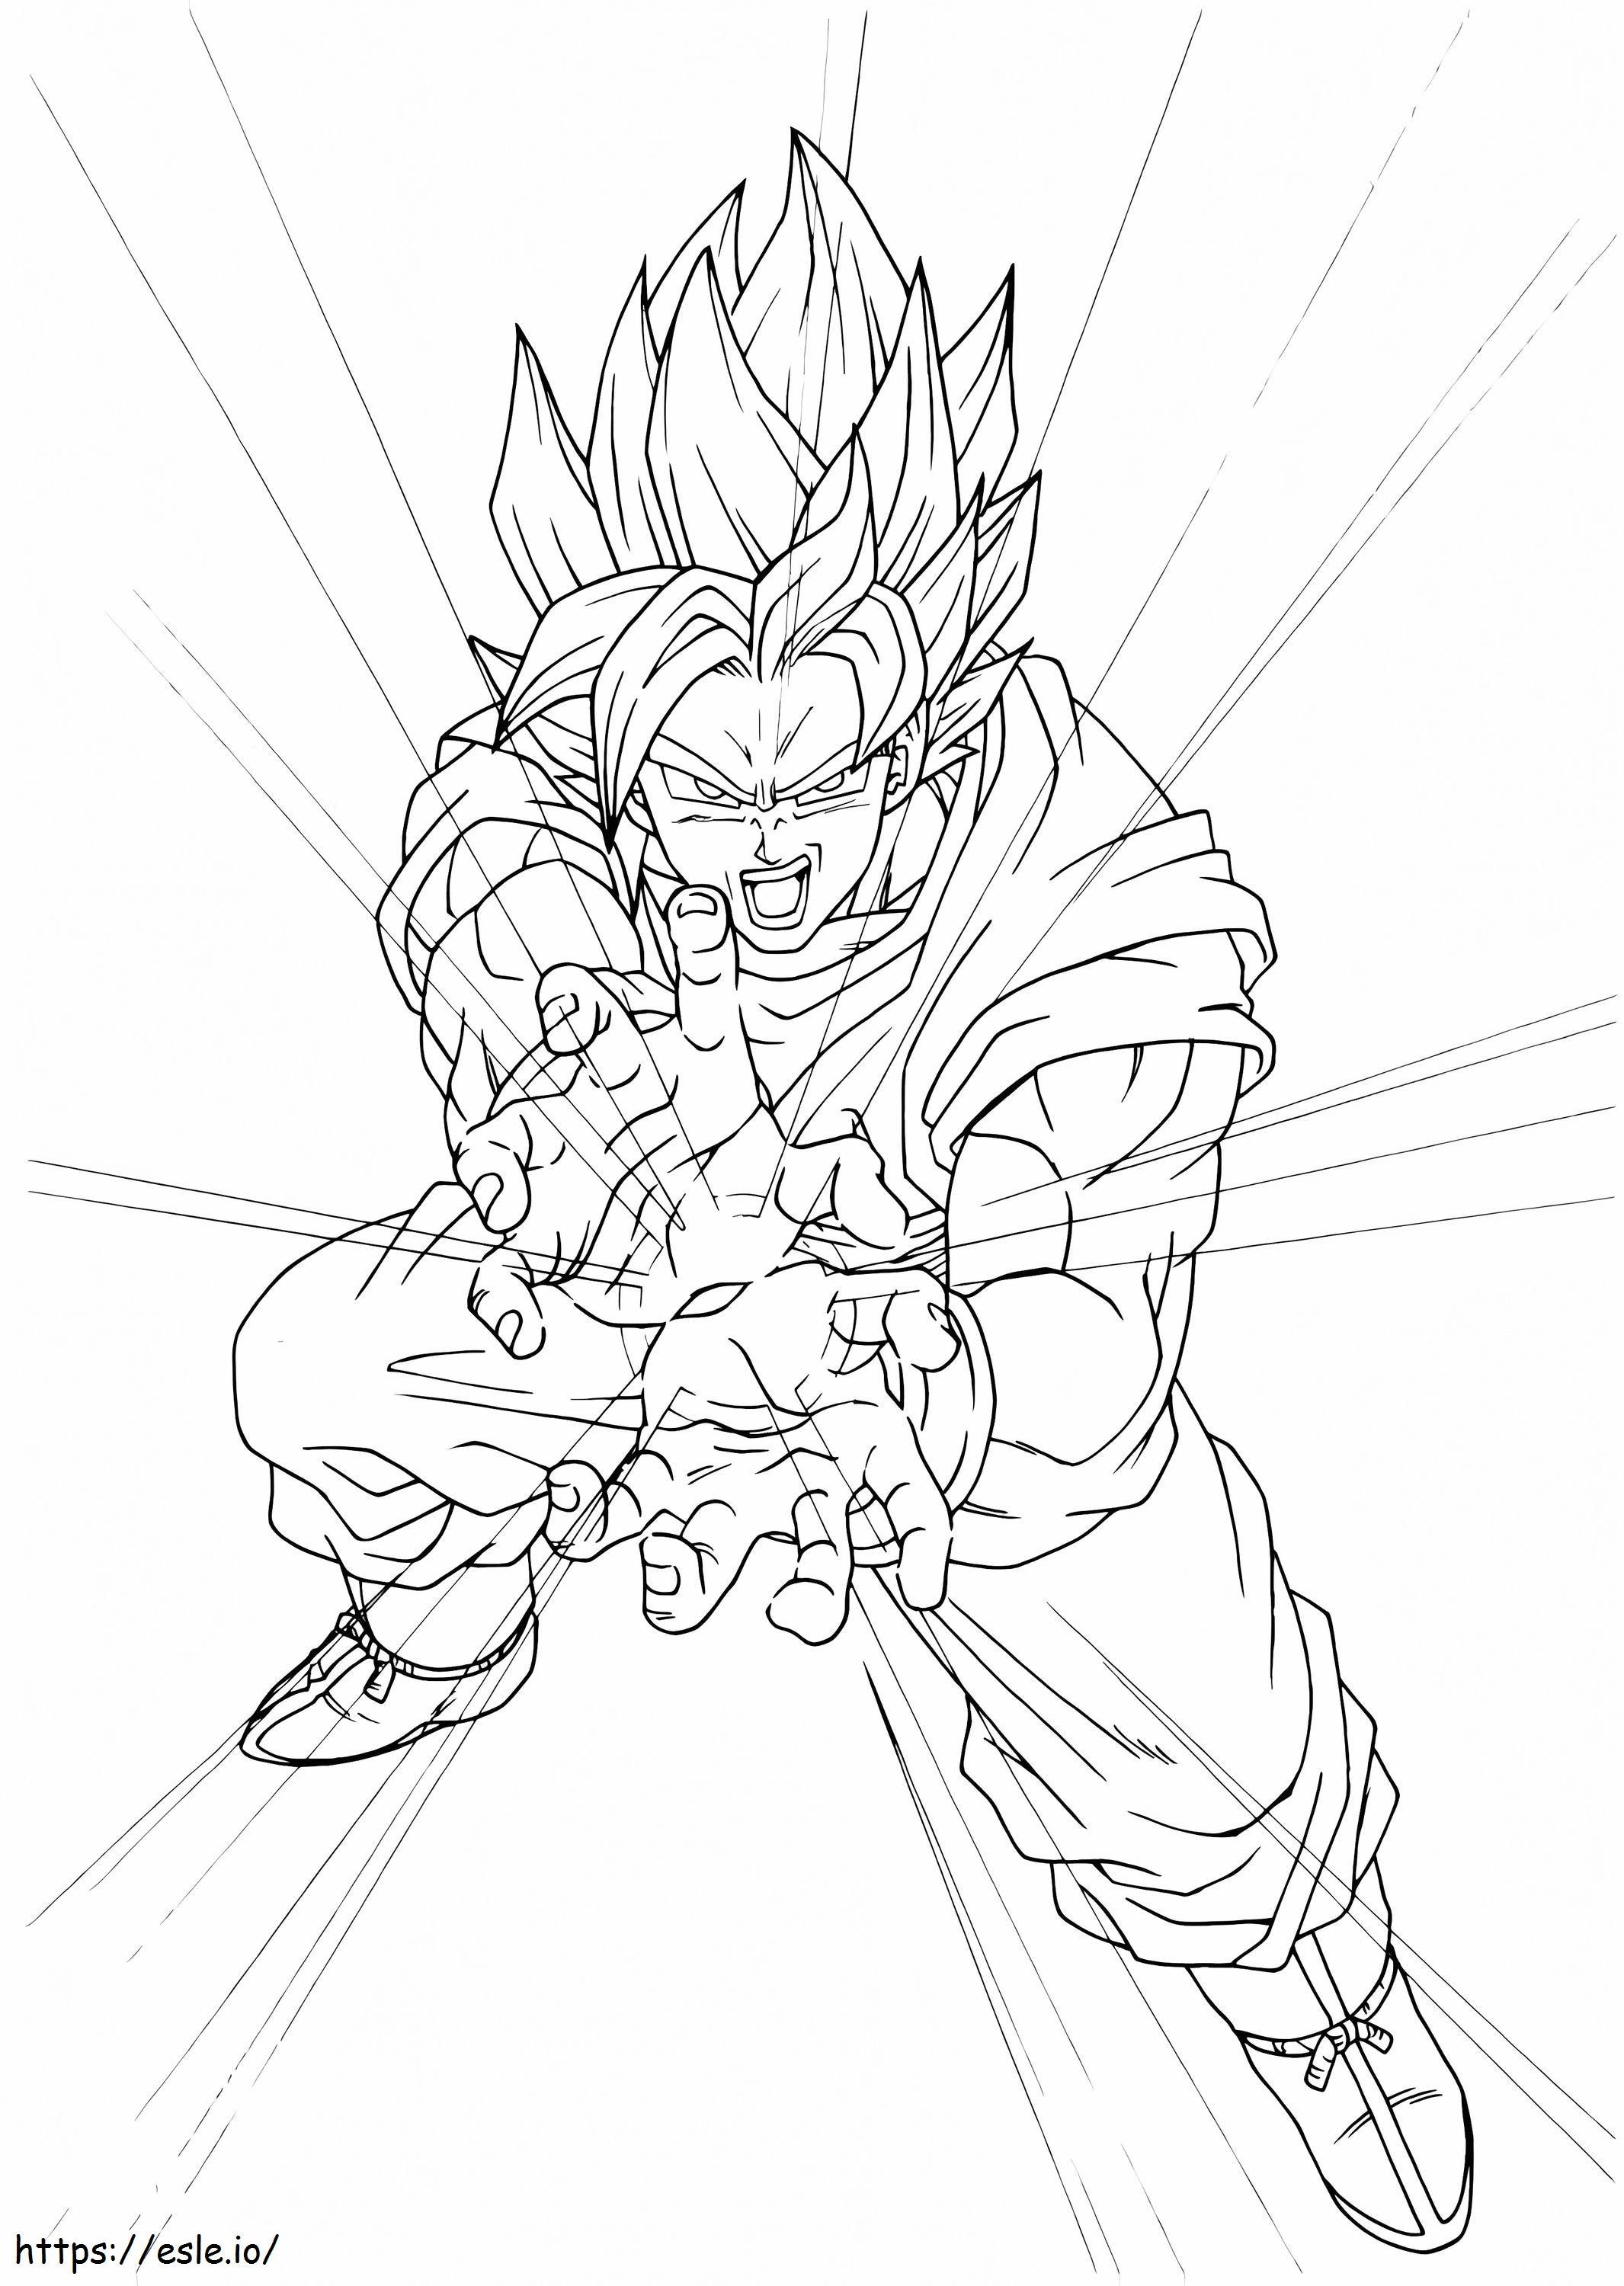 1551081764 De Goku Dragon Ball Z Super Deus Saiyan 4 para colorir